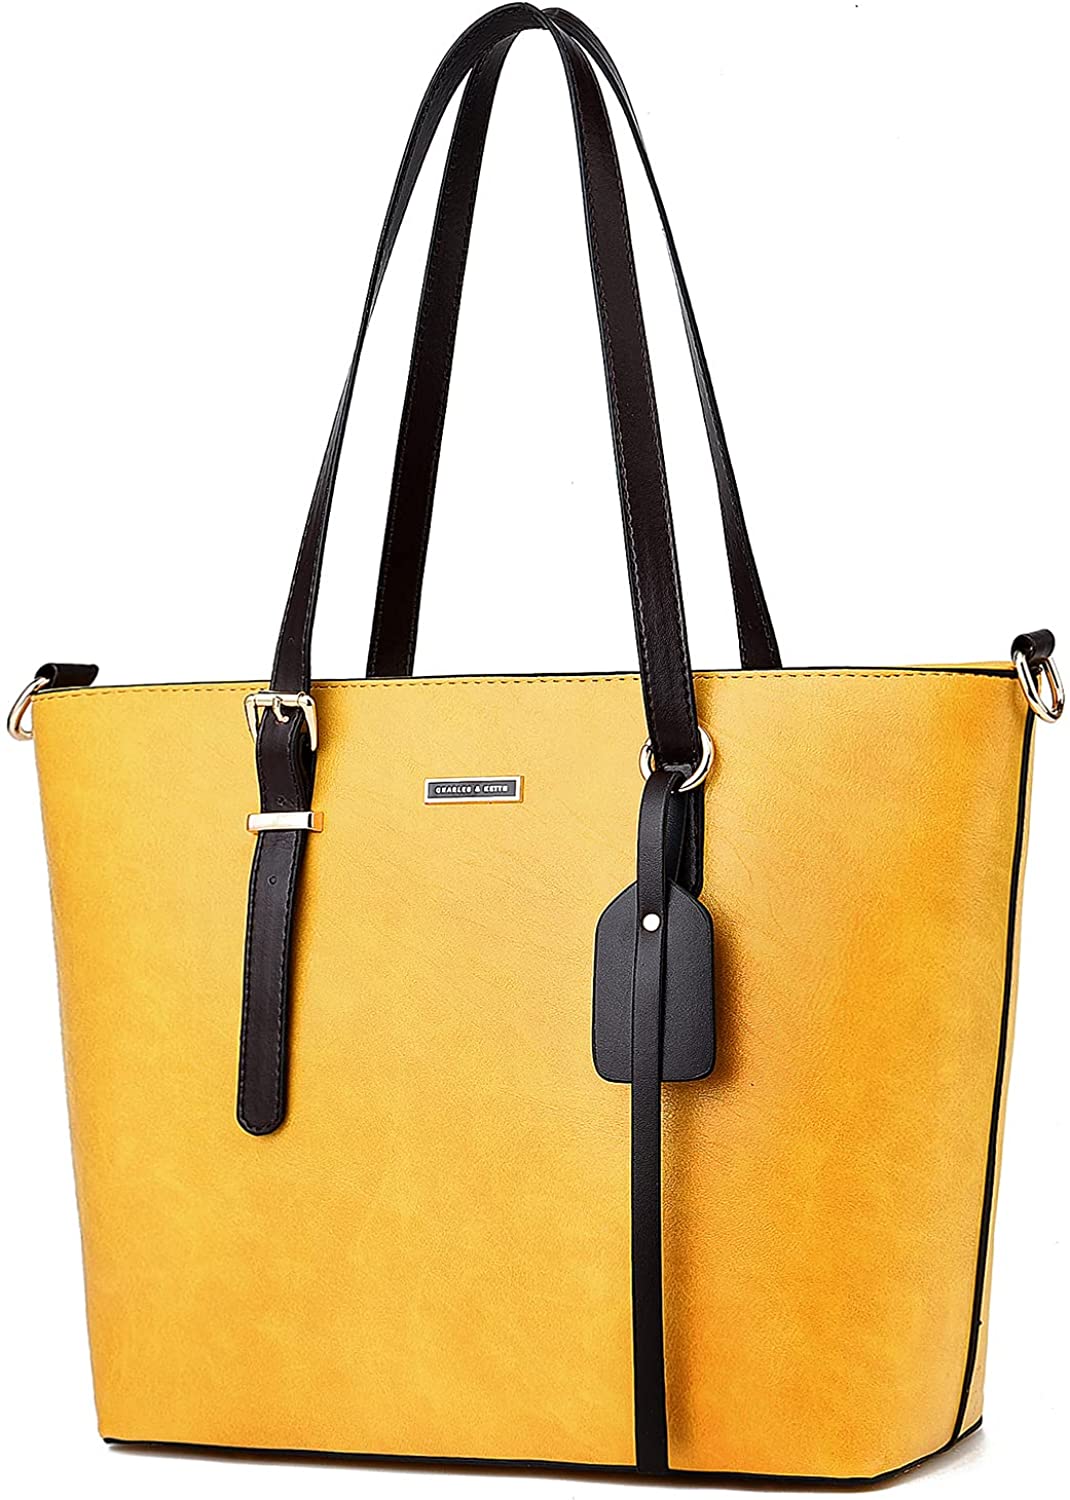 ALARION Women Top Handle Satchel Handbags Shoulder Bag Messenger Tote Bag Purse 